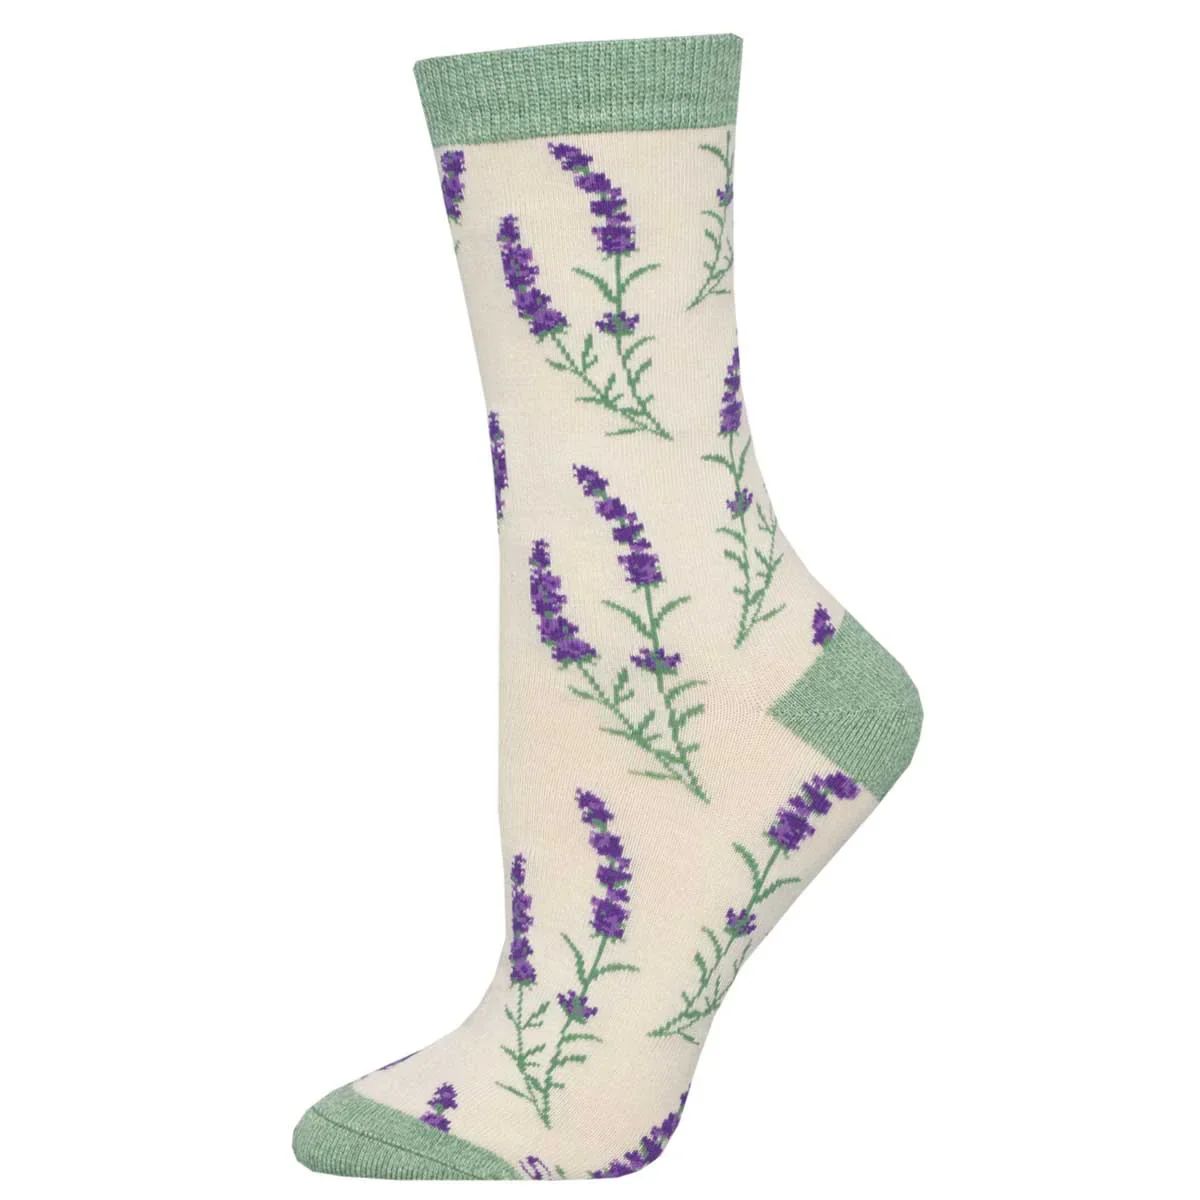 lovely lavender sock ivory white crew sock with sprigs of lavender print